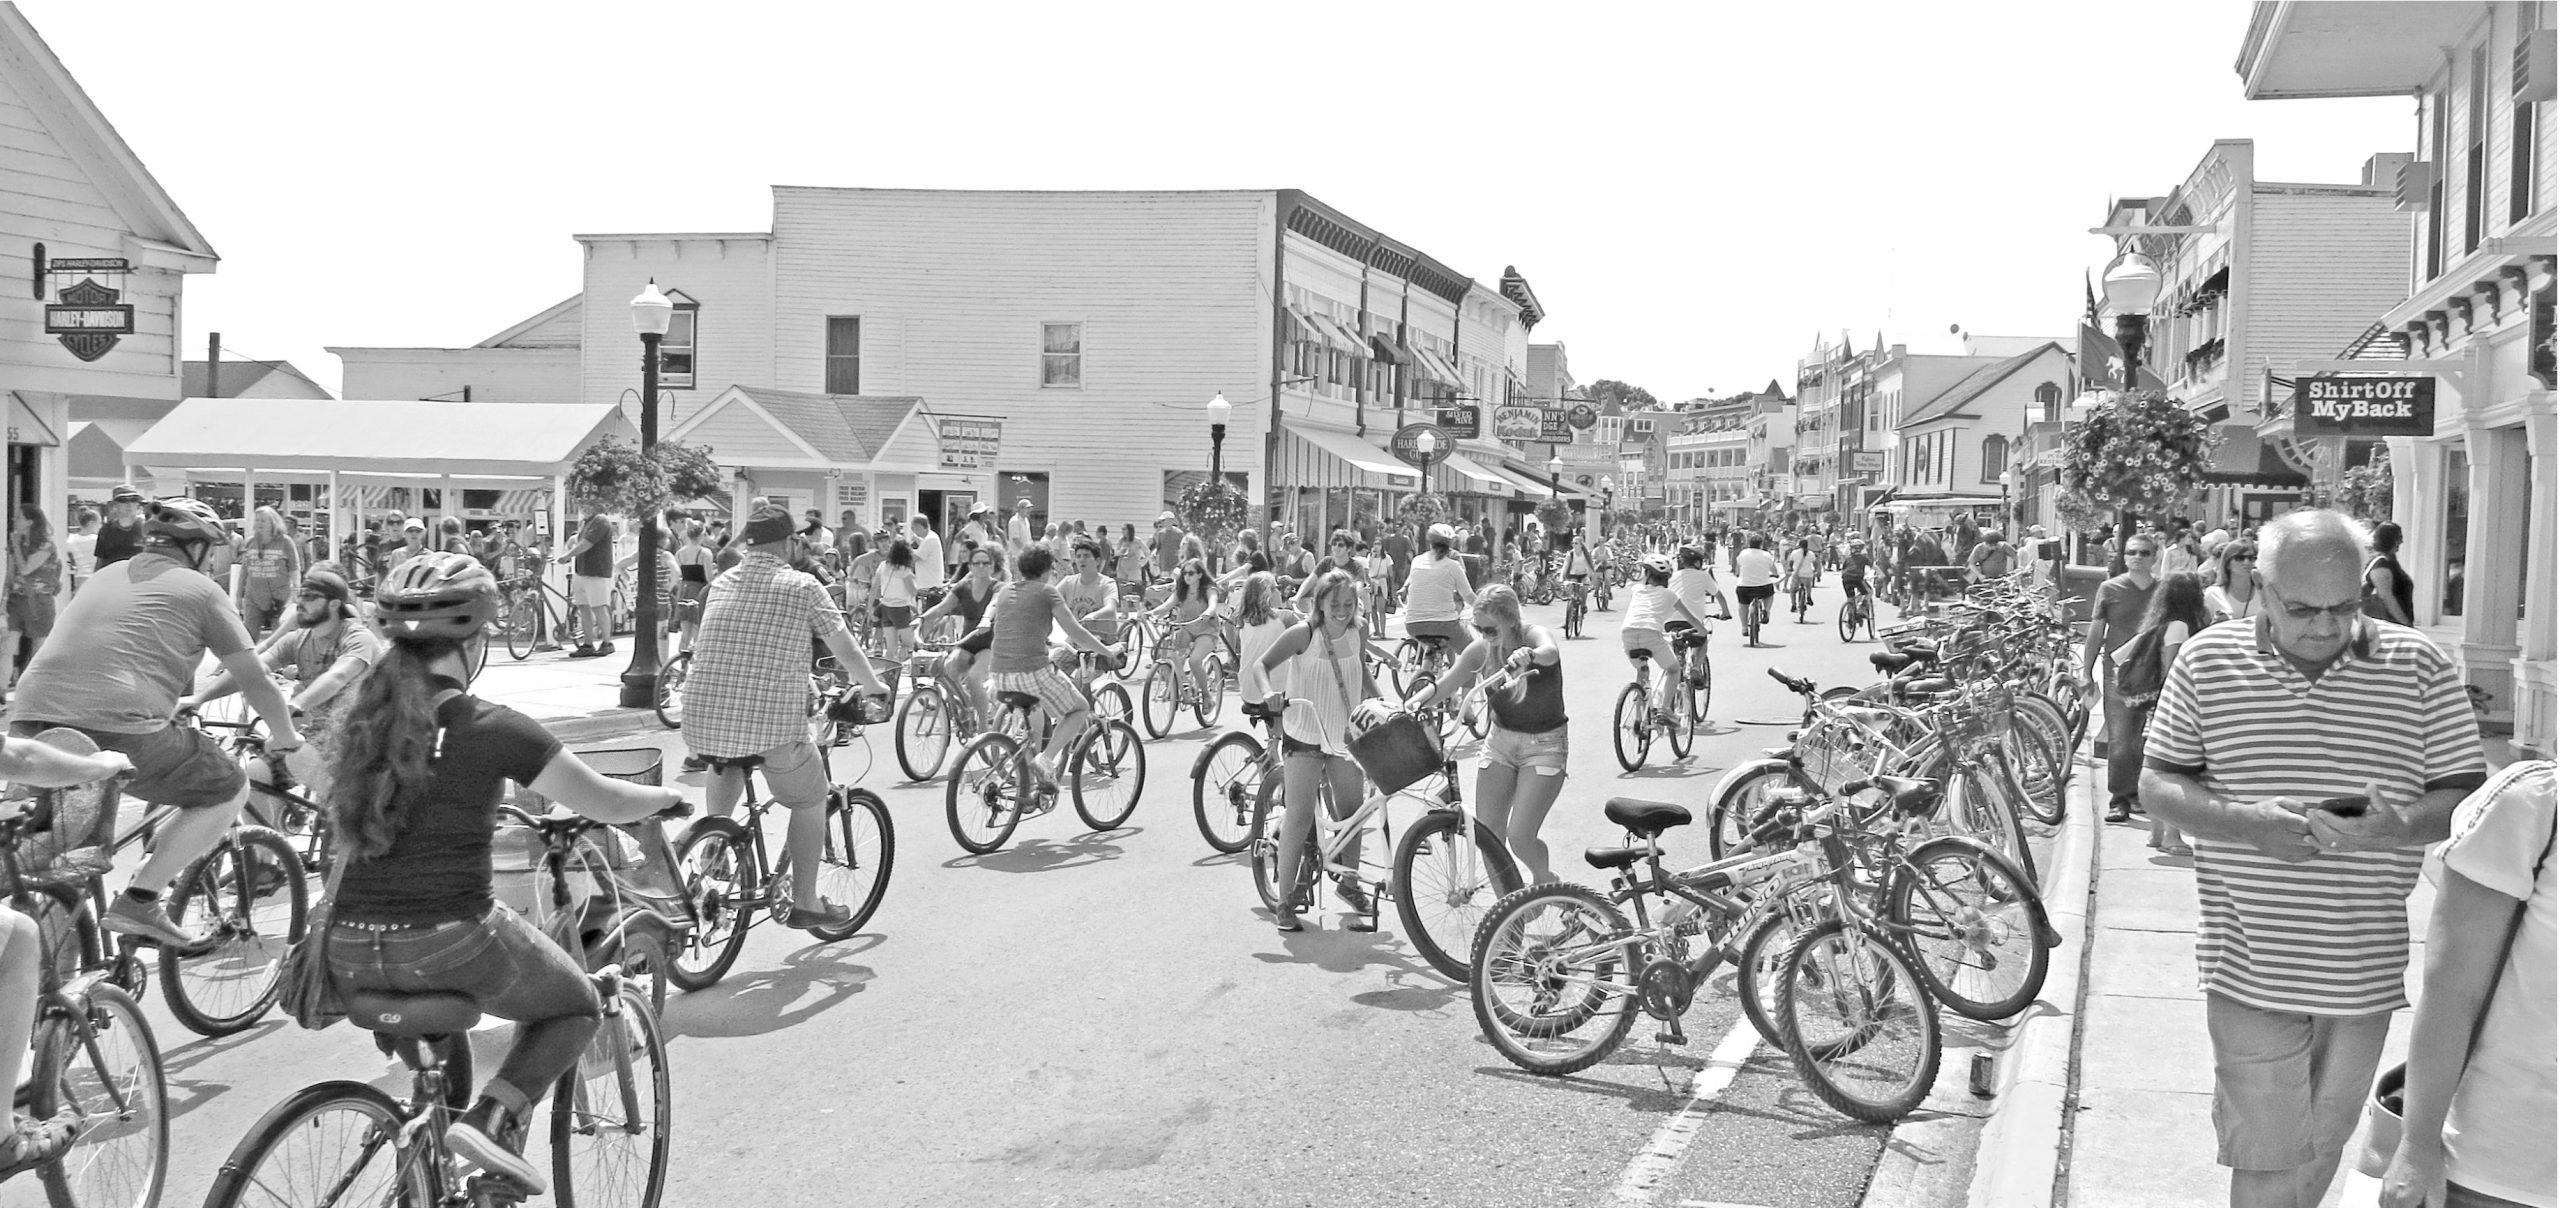 Black and white image of bicycle traffic on Mackinac Island's Main Street